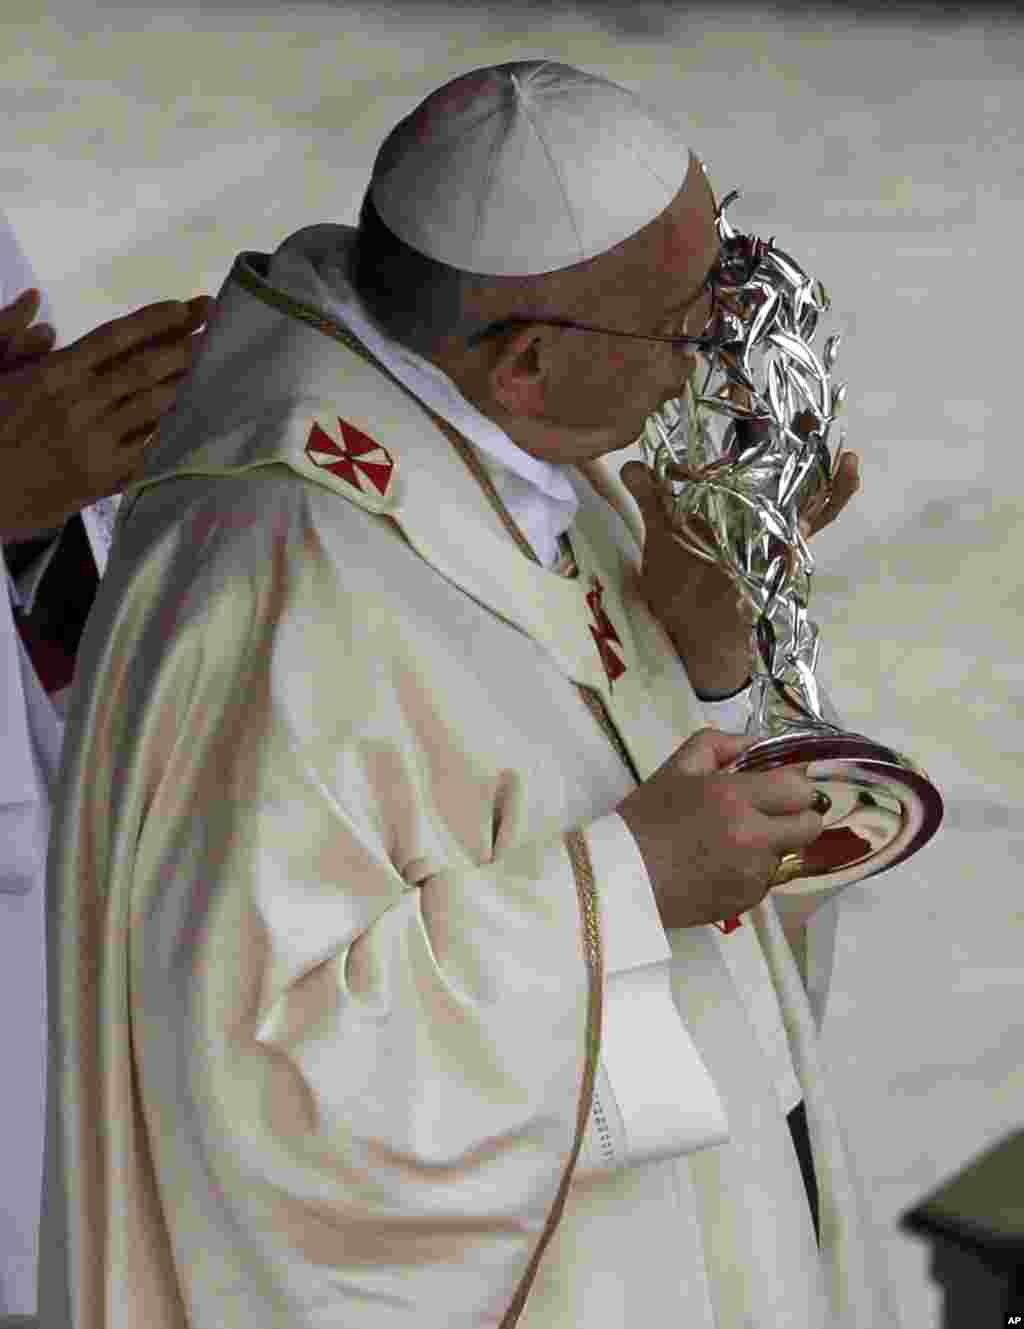 Paus Fransiskus mencium barang peninggalan milik Yohanes Paulus ke-2 dalam sebuah upacara di Lapangan Santo Petrus di Vatikan, 27 April 2014.